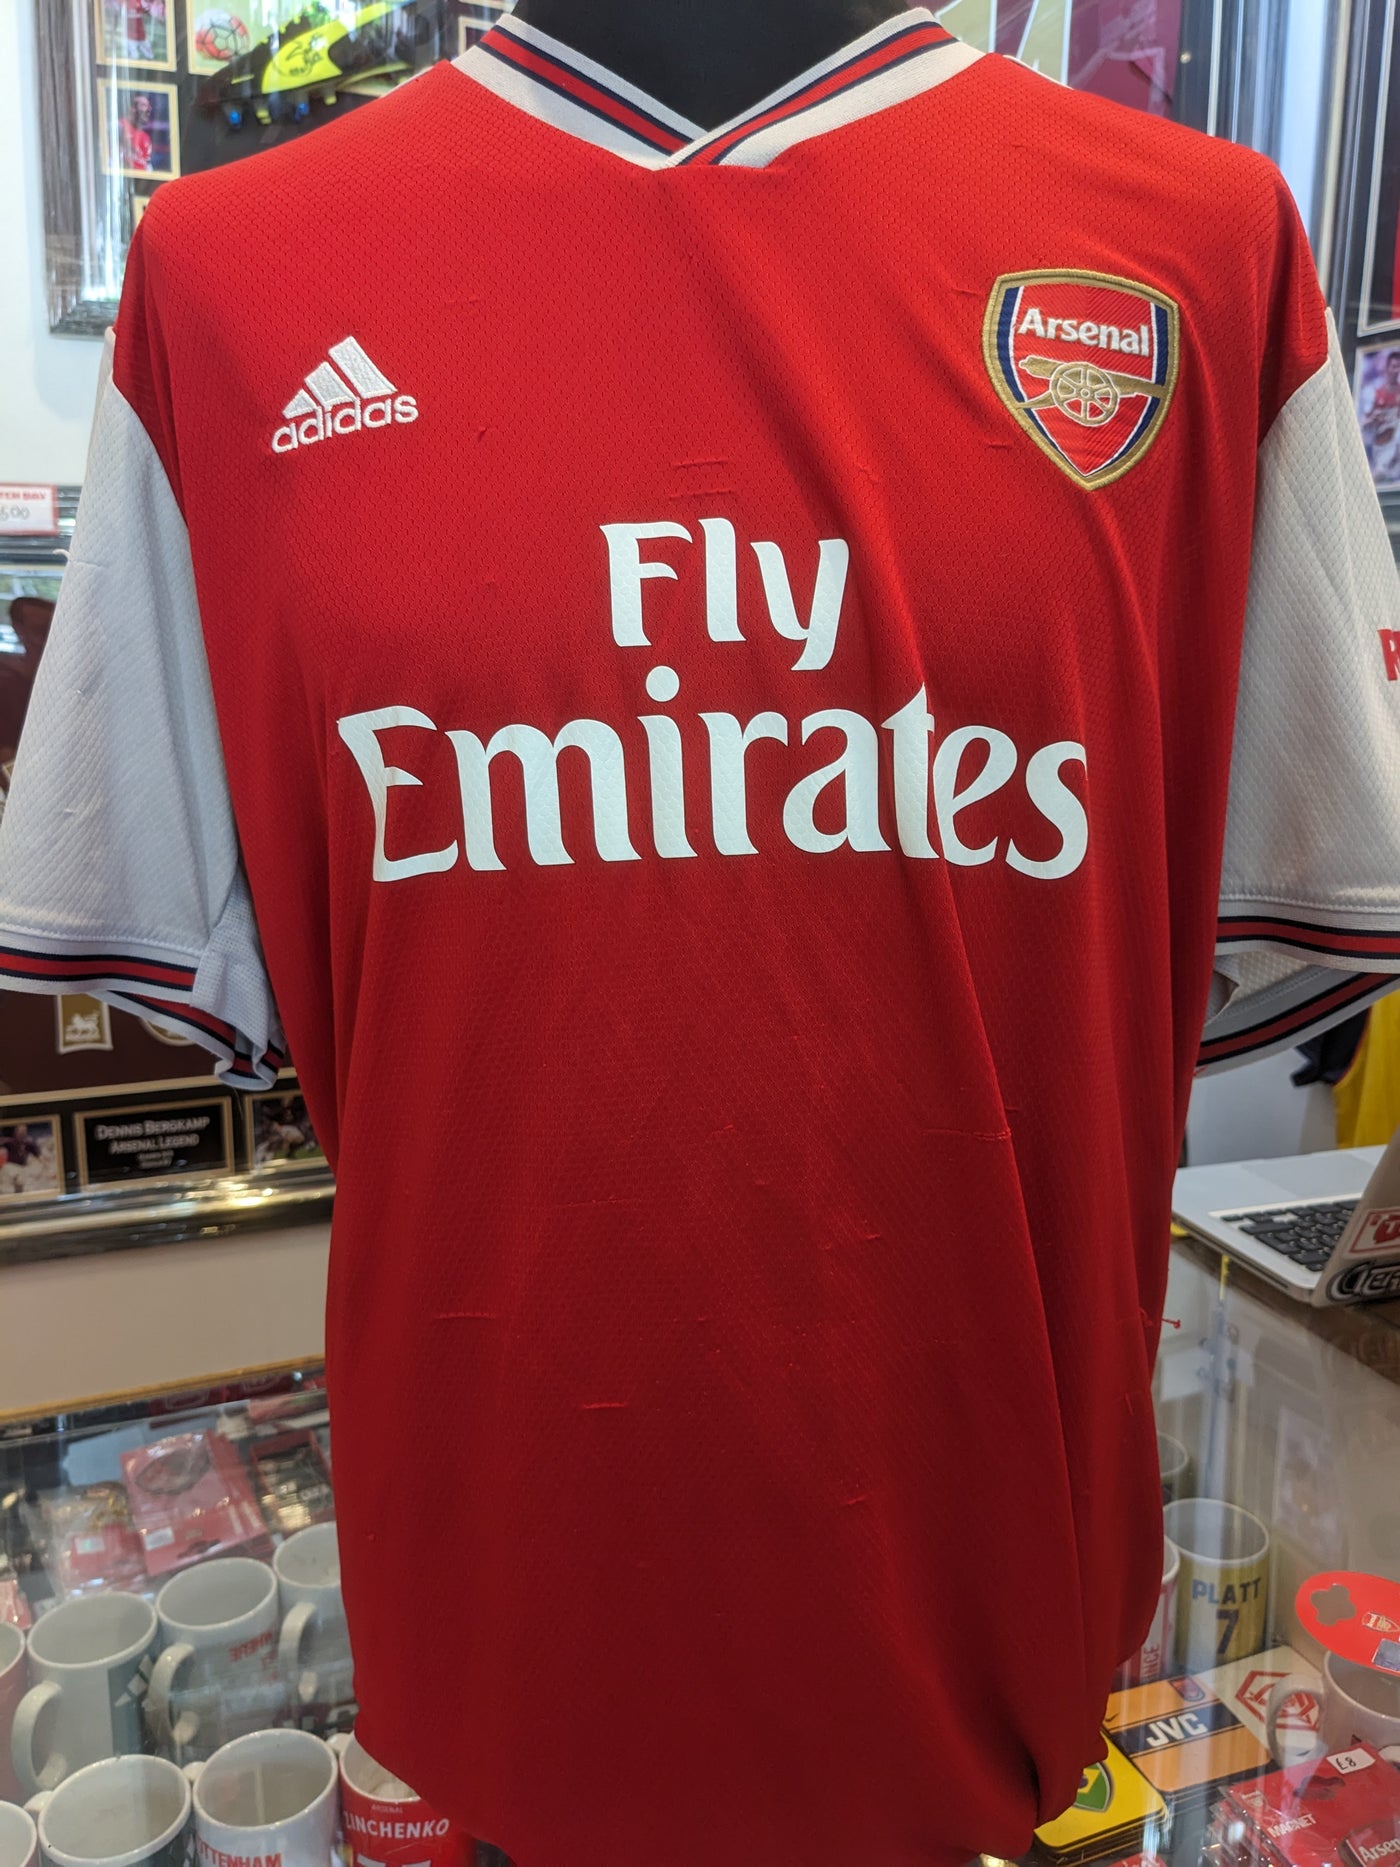 Arsenal FC 19/20 Home Kit